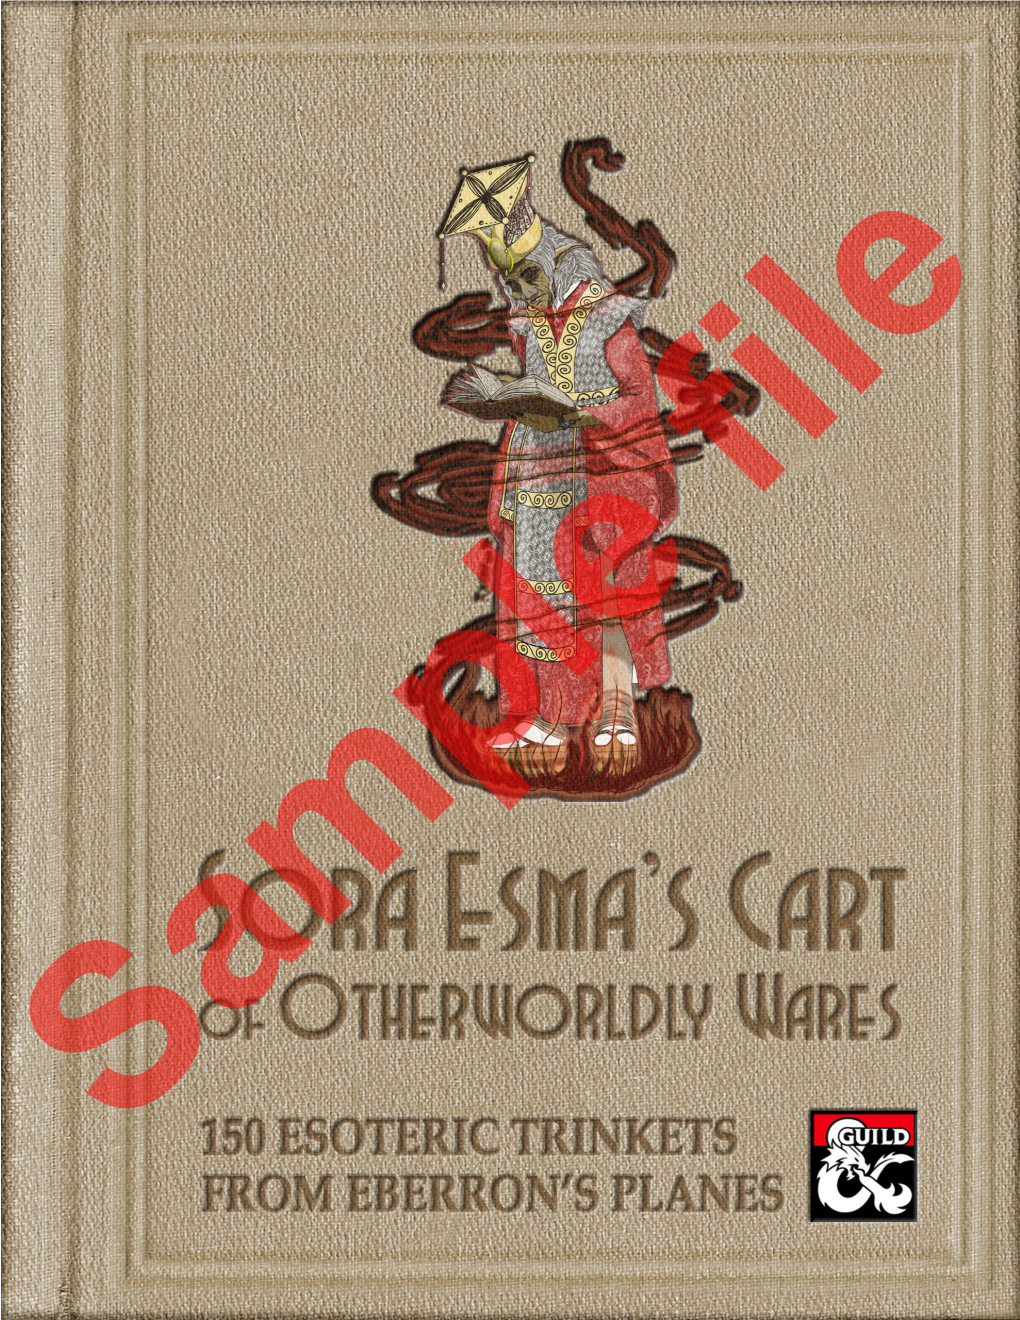 Sora Esma's Cart of Otherworldly Wares